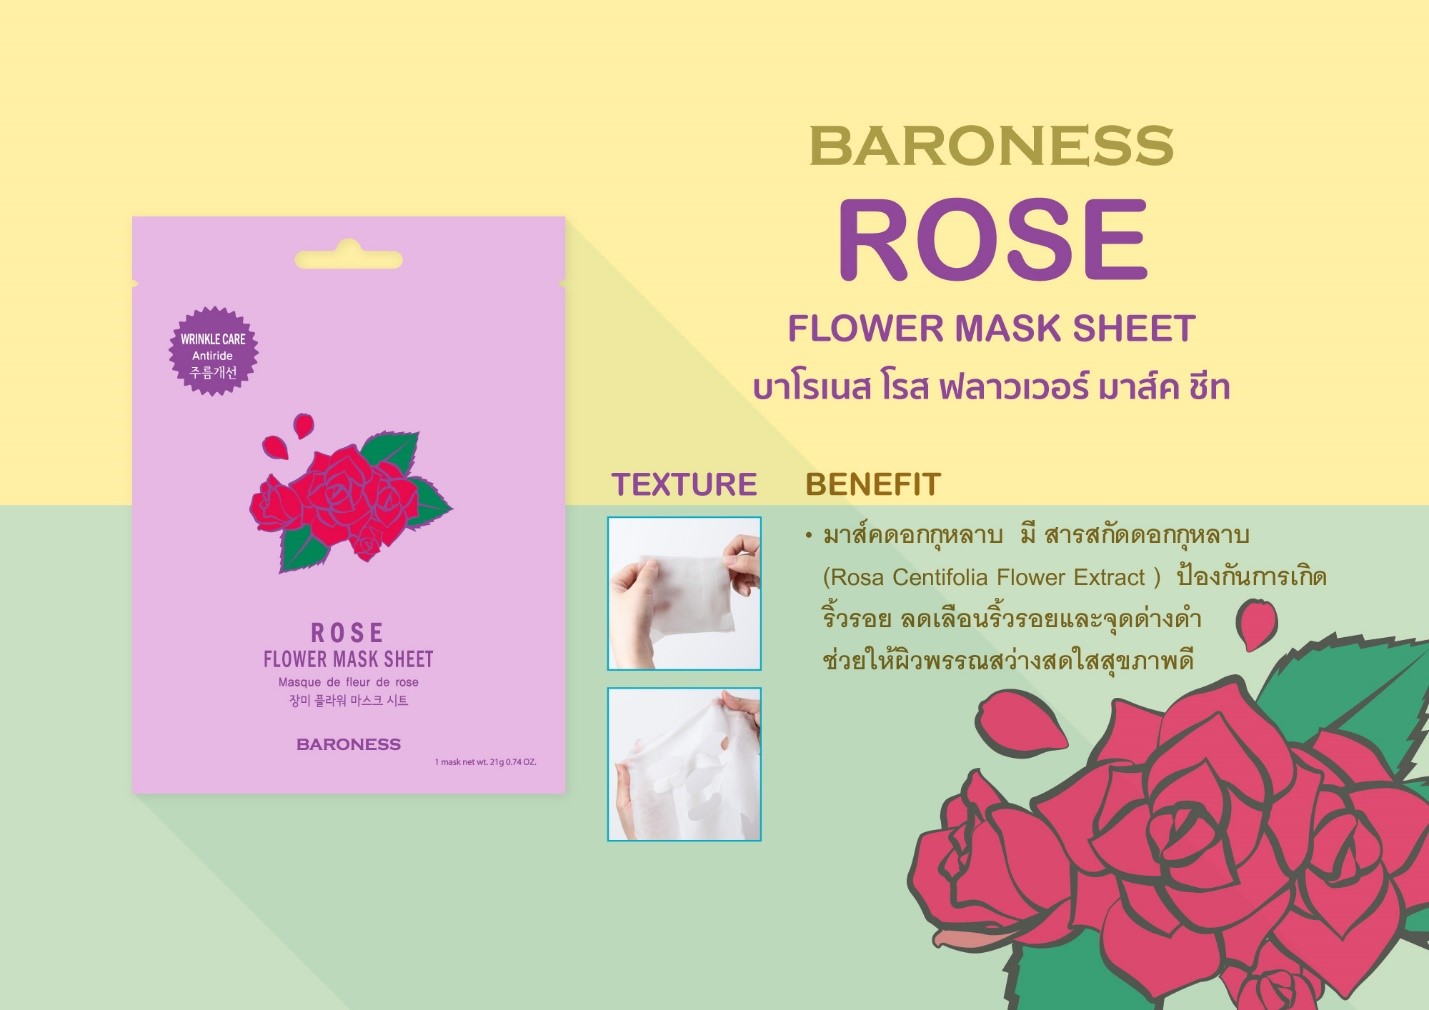 Baroness ,Rose Flower Mask Sheet,มาส์กสูตรสารสกัดดอกกุหลาบ,Baroness Rose Flower Mask Sheet  ราคา,Baroness Rose Flower Mask Sheet รีวิว,Baroness Rose Flower Mask Sheet ซื้อได้ที่